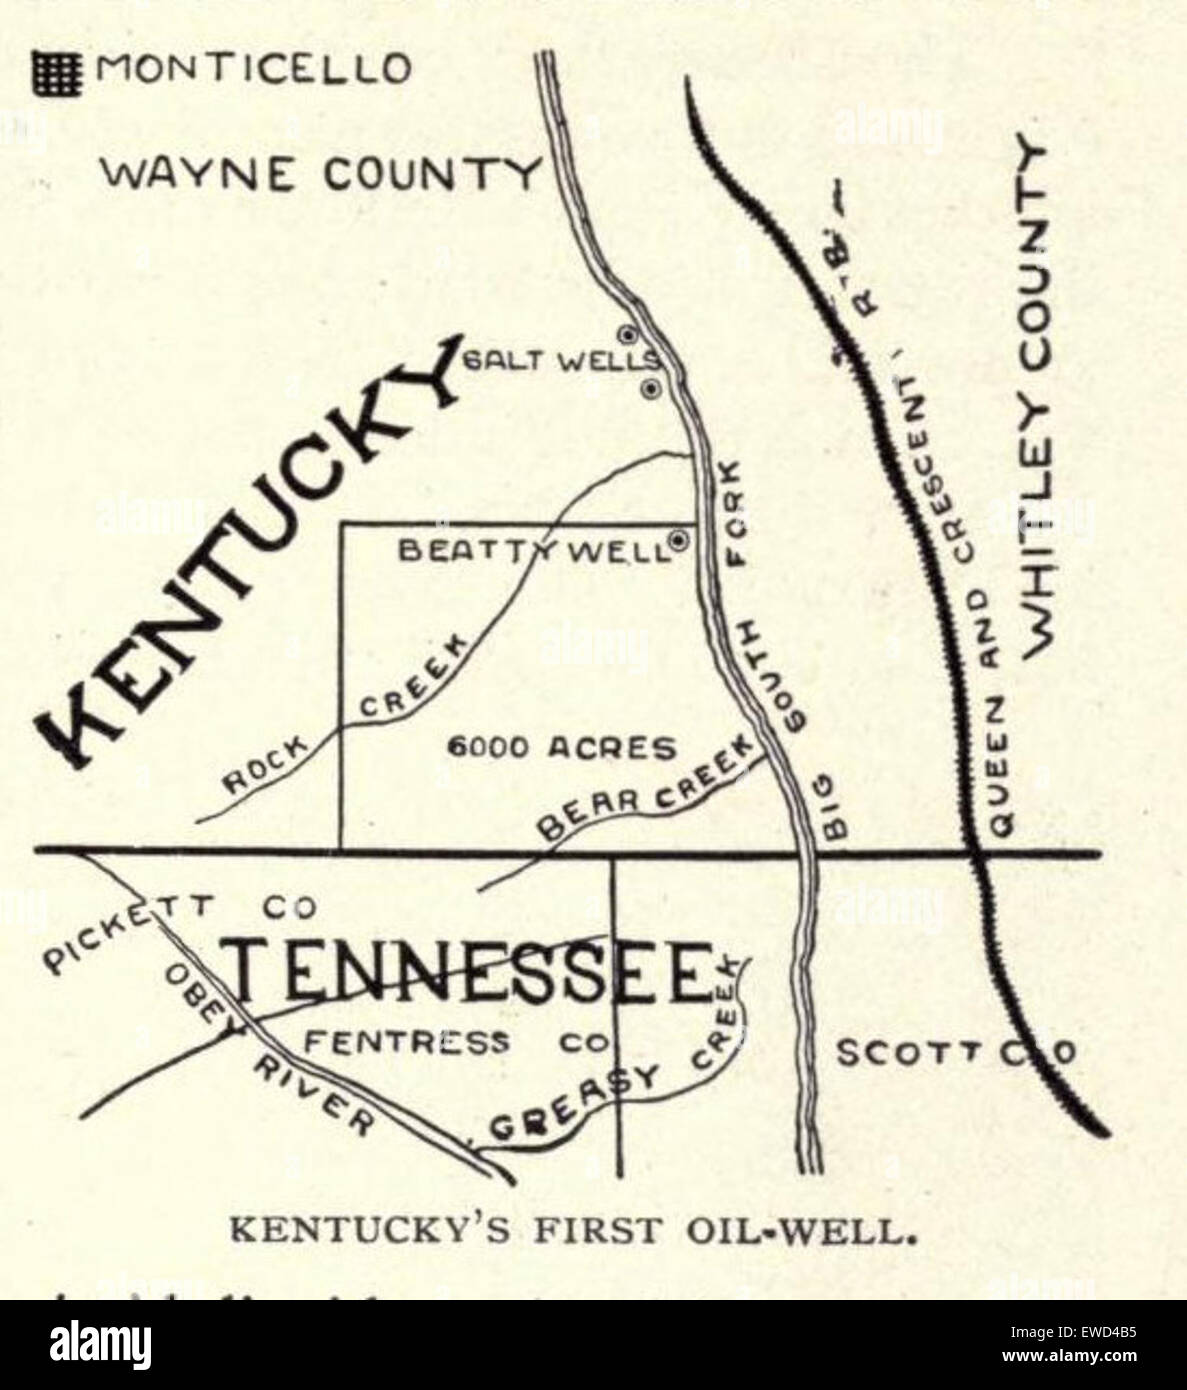 McLaurin,(1902) PIC.024 Oil-Well première du Kentucky Banque D'Images